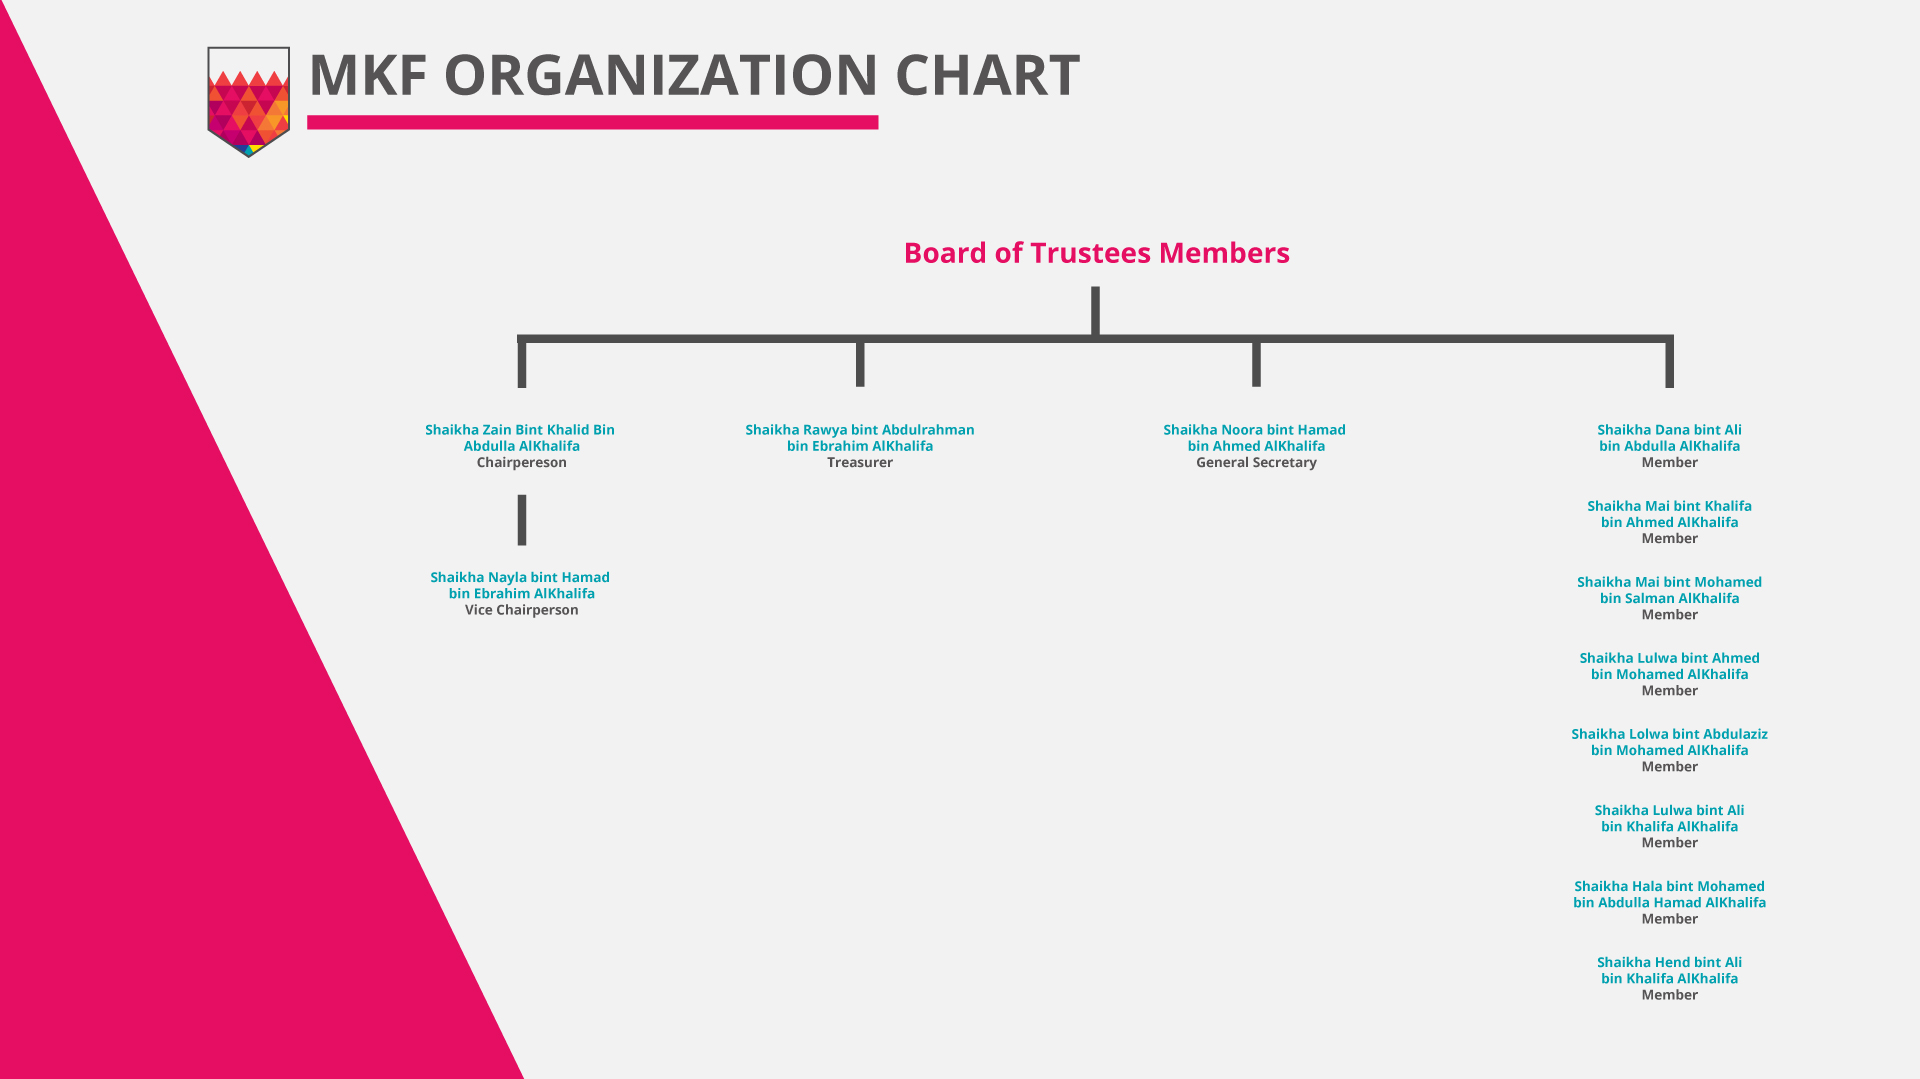 Board of Trustees and Member